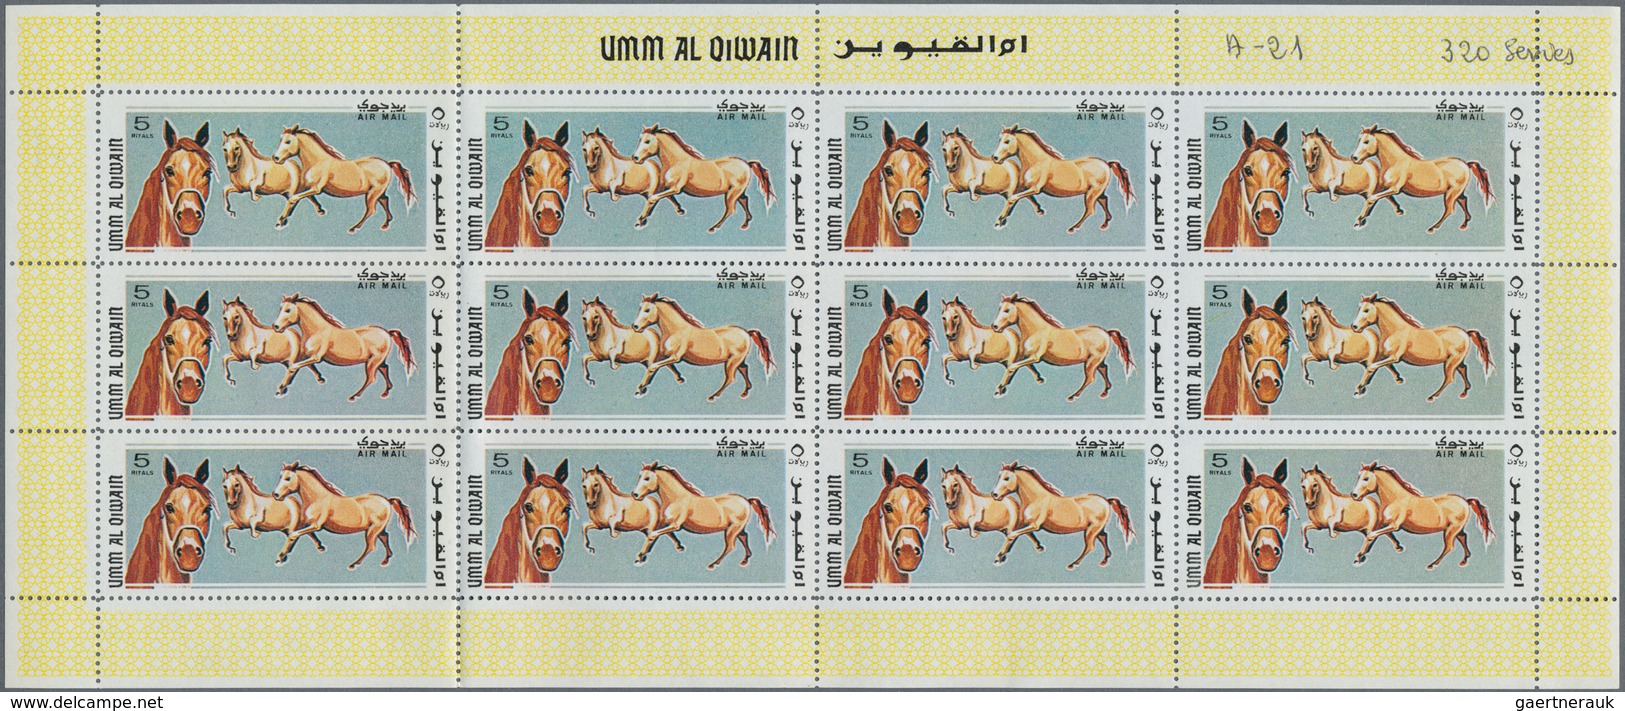 29562 Umm Al Qaiwain: 1969, Horses, Airmail Stamps 1.50r., 2.50r., 4r. And 5r., 320 Copies Each Within (fo - Umm Al-Qiwain